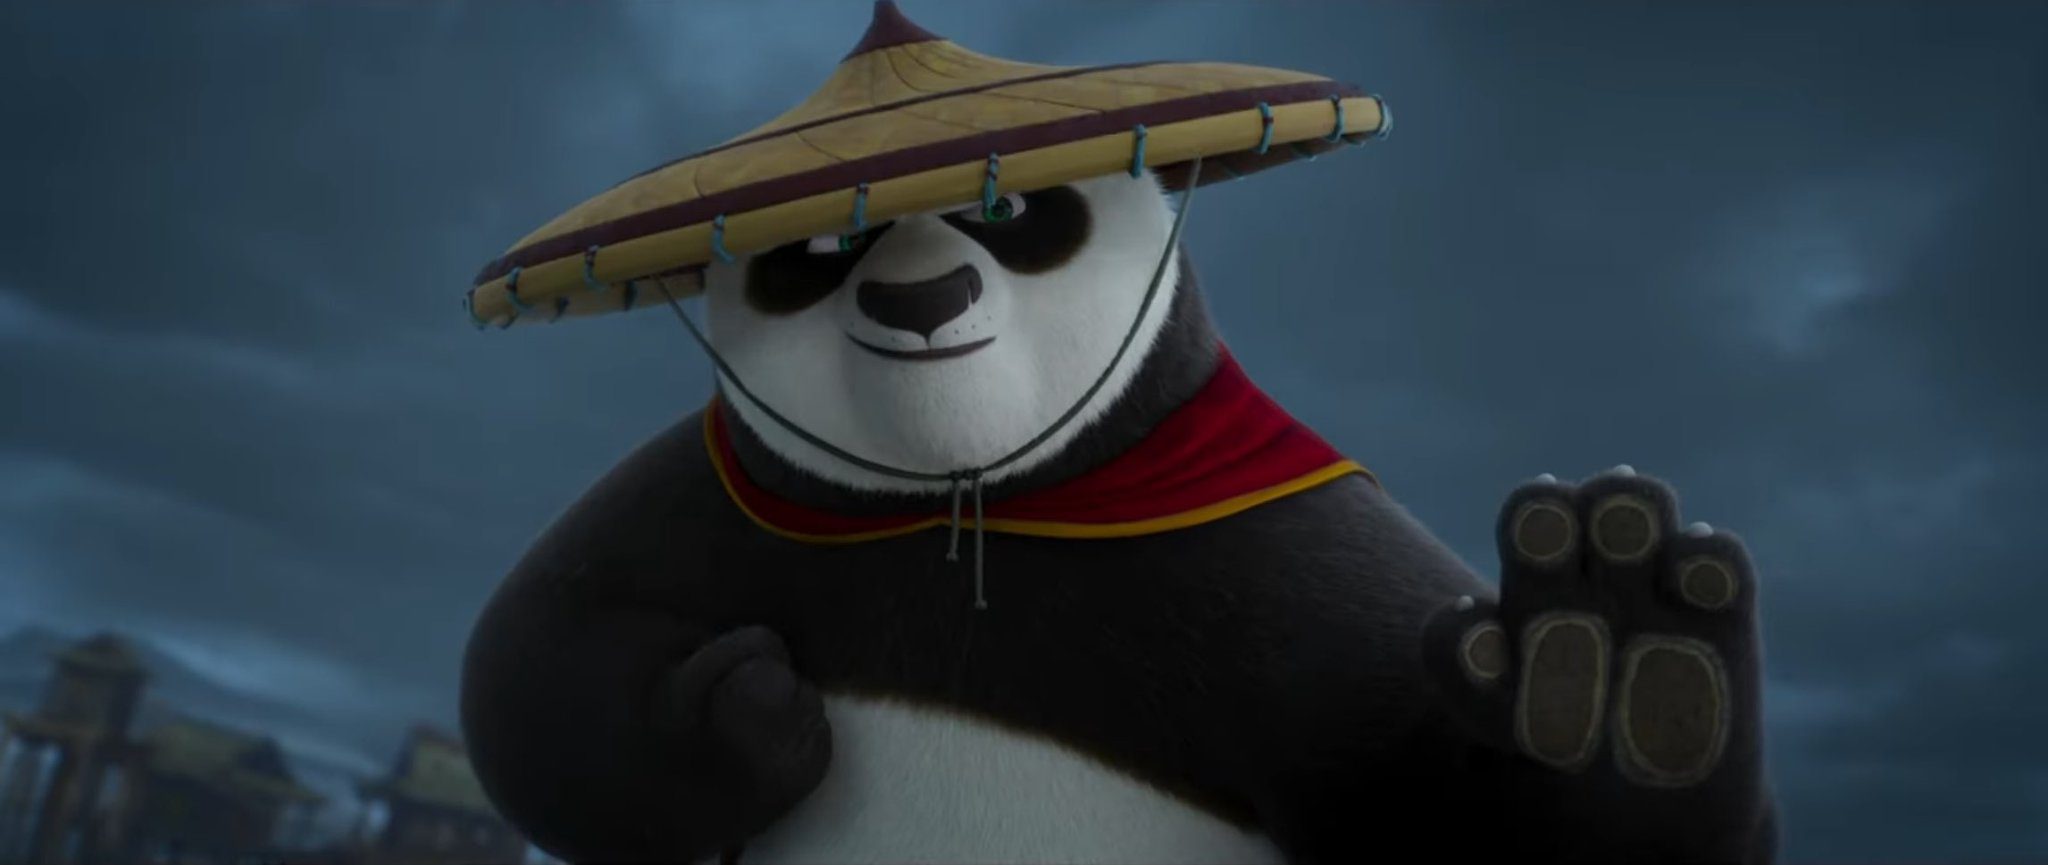 Kung Fu Panda 4 imagem oficial